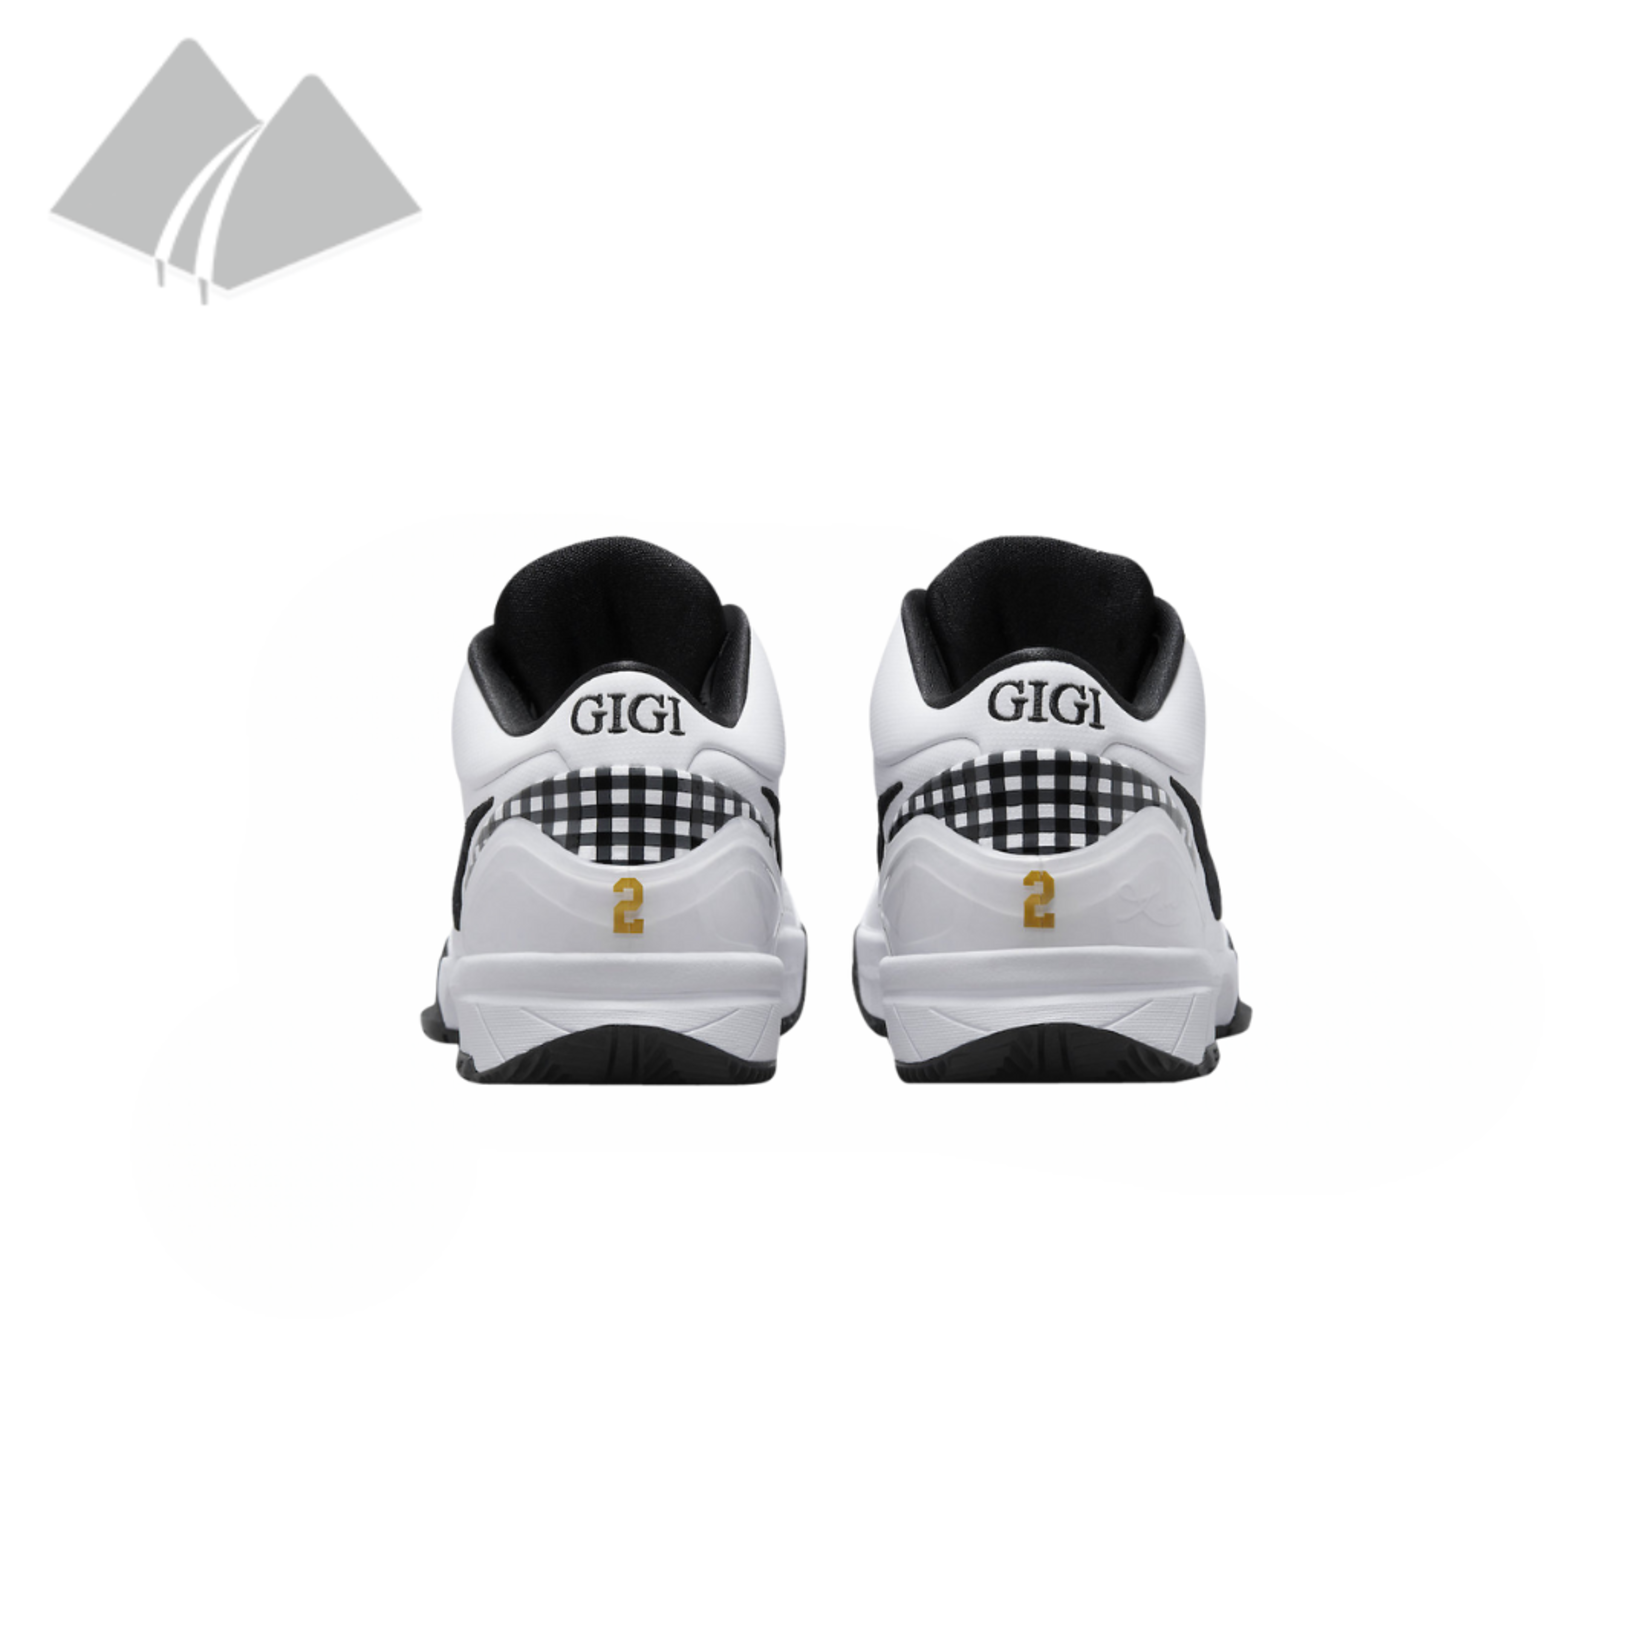 Nike Nike Kobe 4 Proto (M) Mambacita Gigi